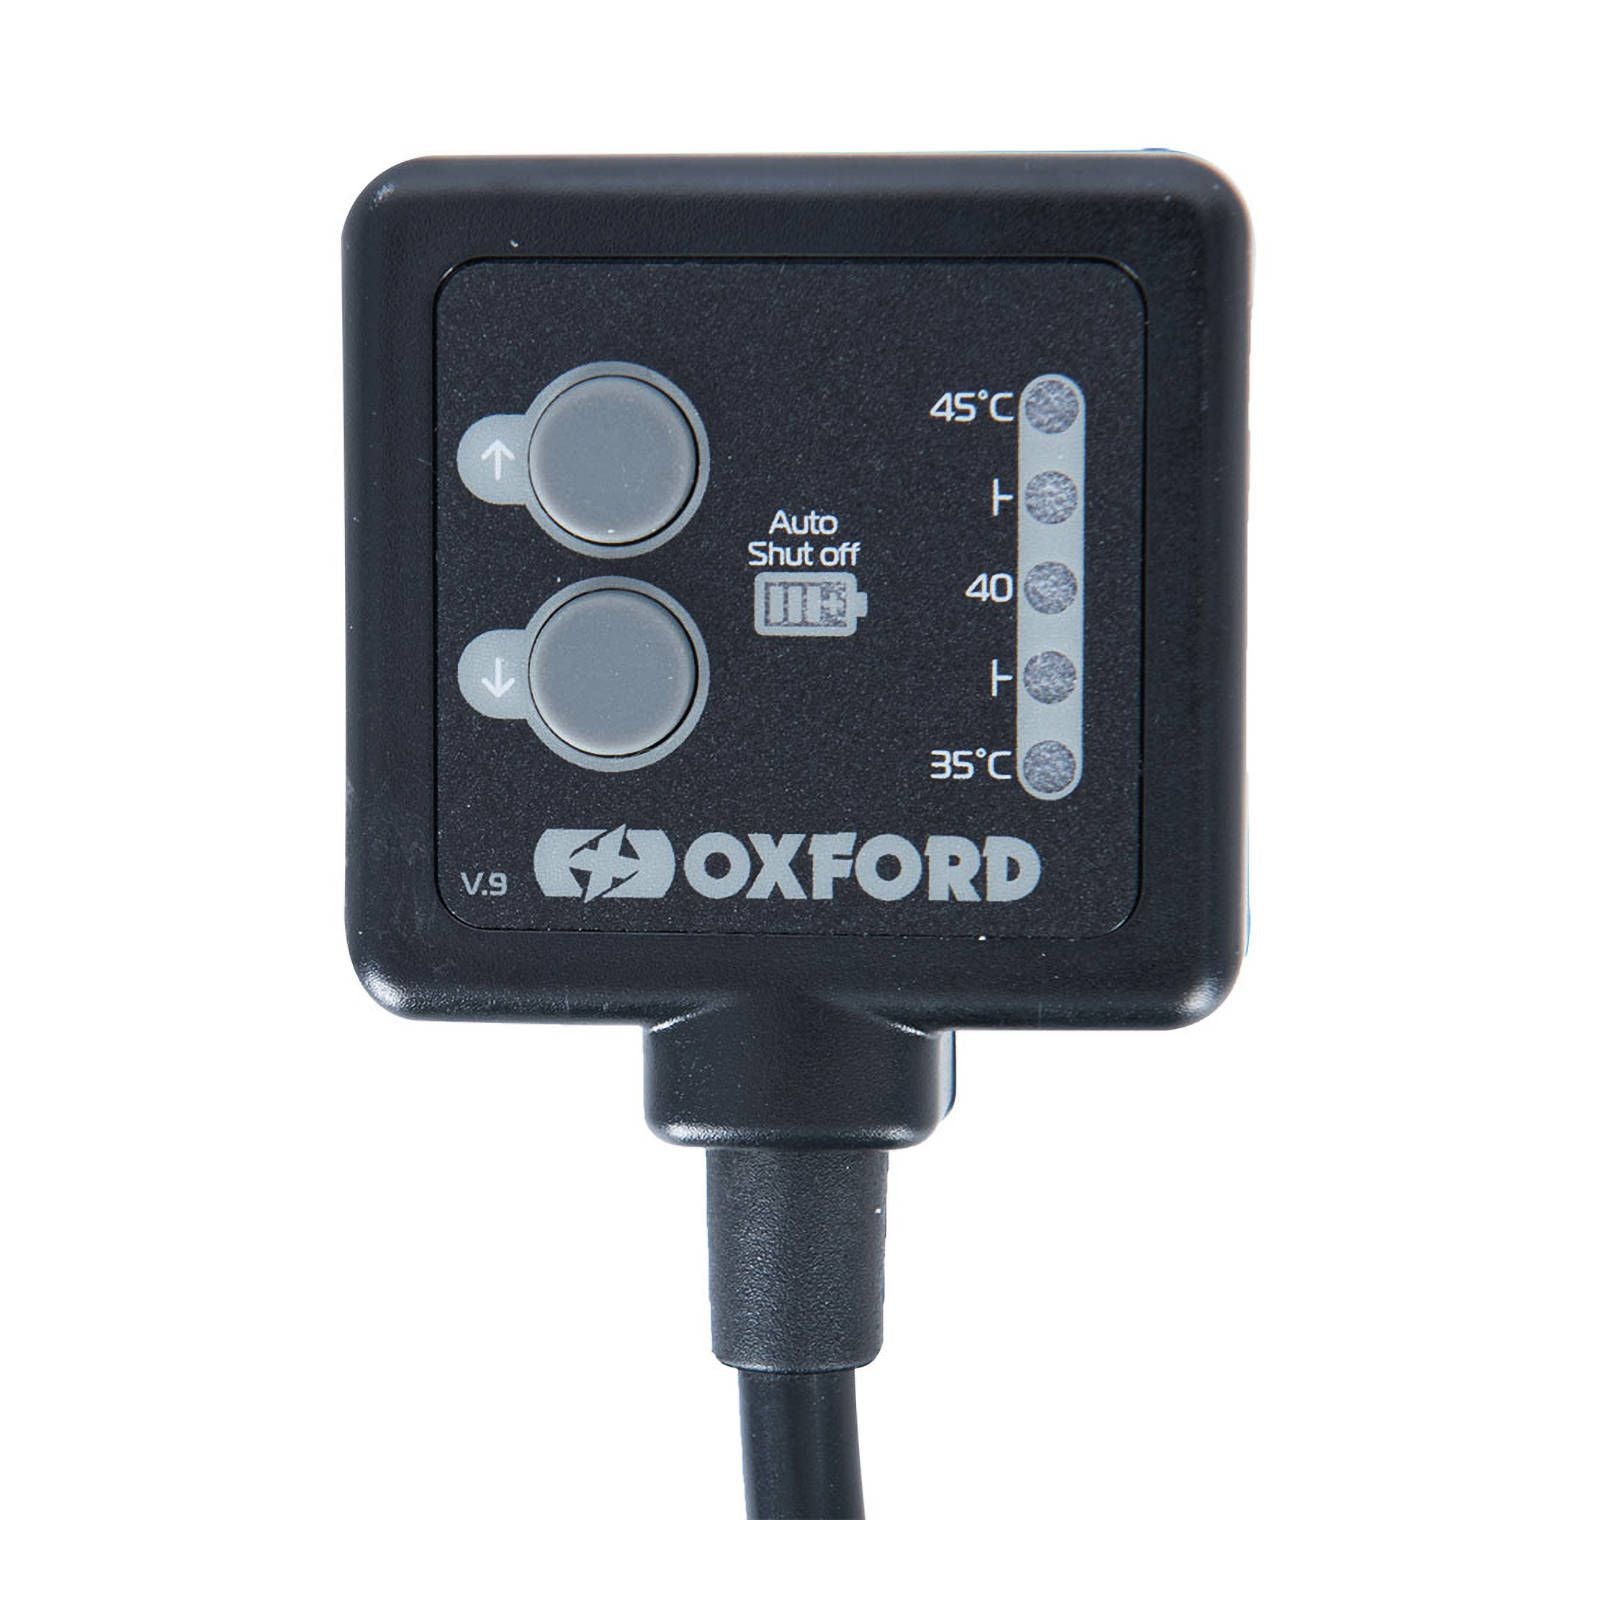 New OXFORD V9 EVO Hotgrips V9 Controller - Road #OXEL425